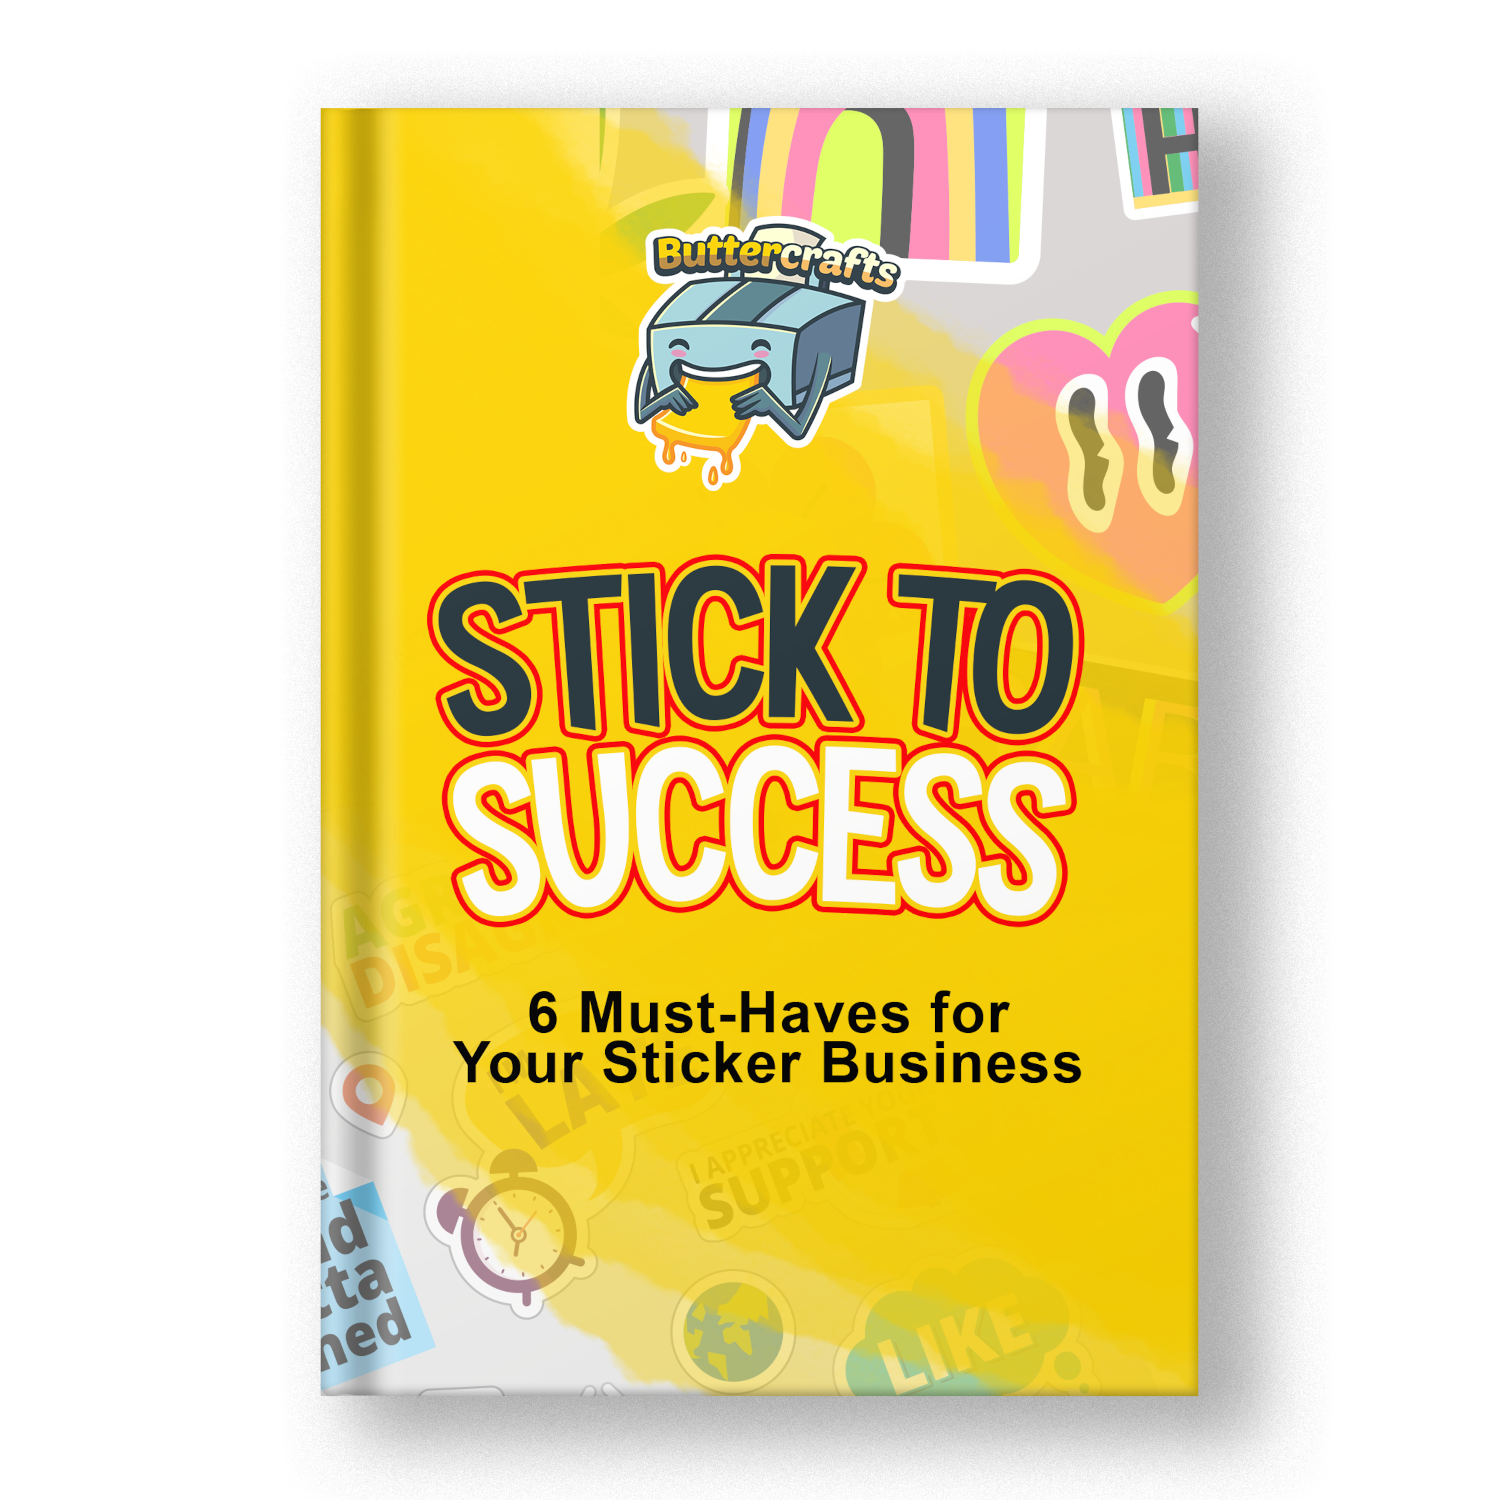 Stick to Success PDF